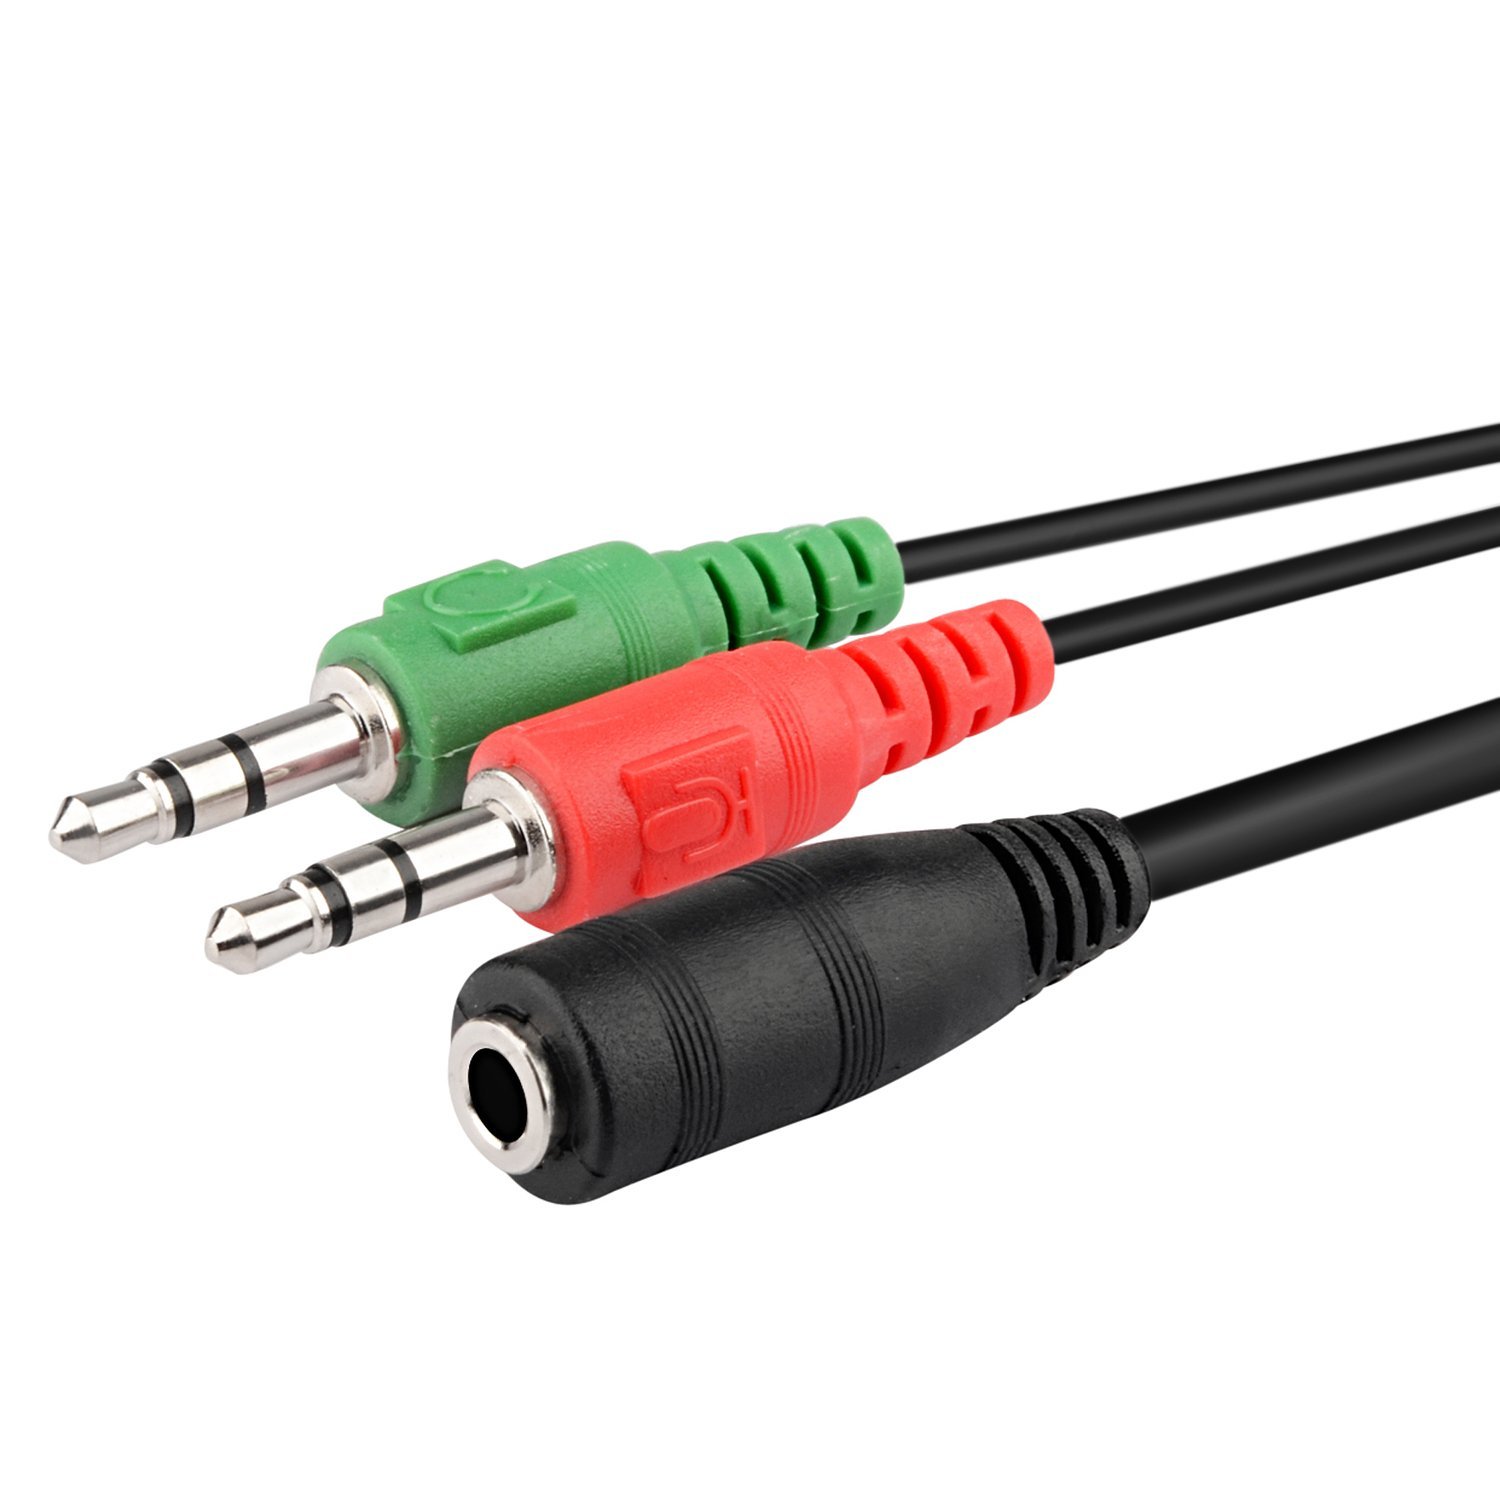 2 In 1 Cable Adapter Splitter 3 5 mm Audio Earphone Headset to 2 Female Jack Headphone%20(3)